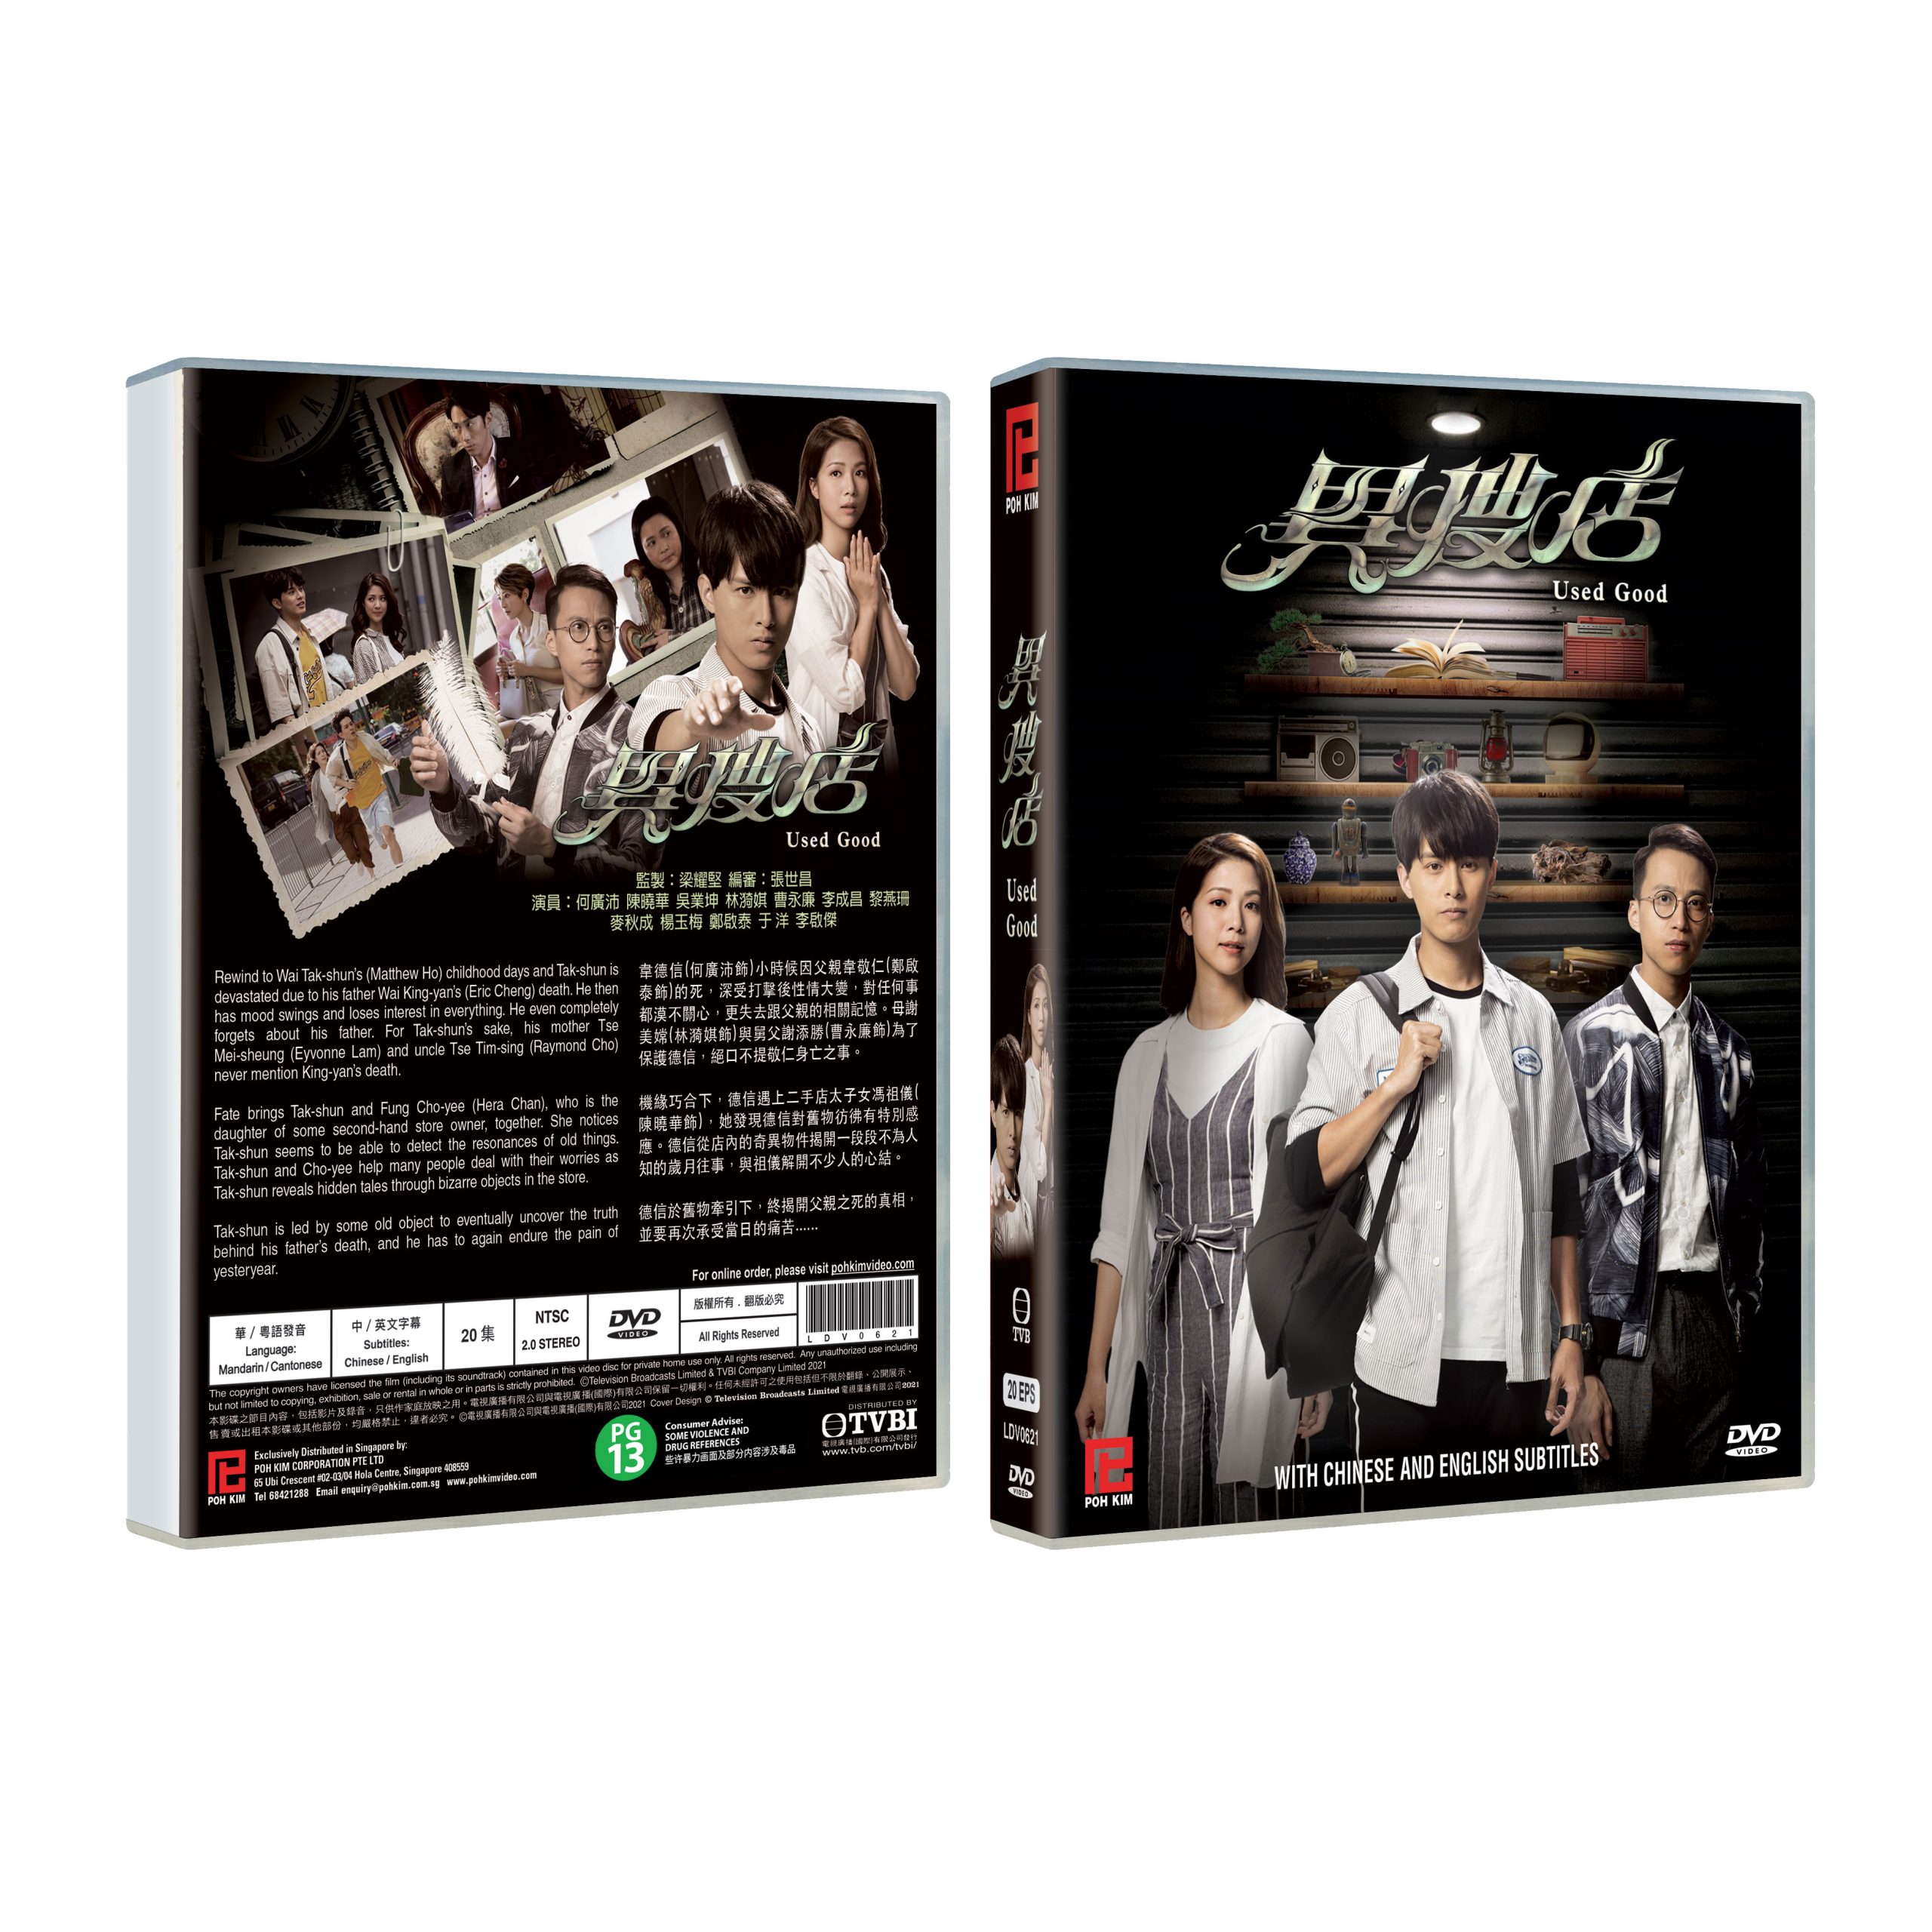 Used Good 異搜店(TVB Drama DVD) - Poh Kim Video